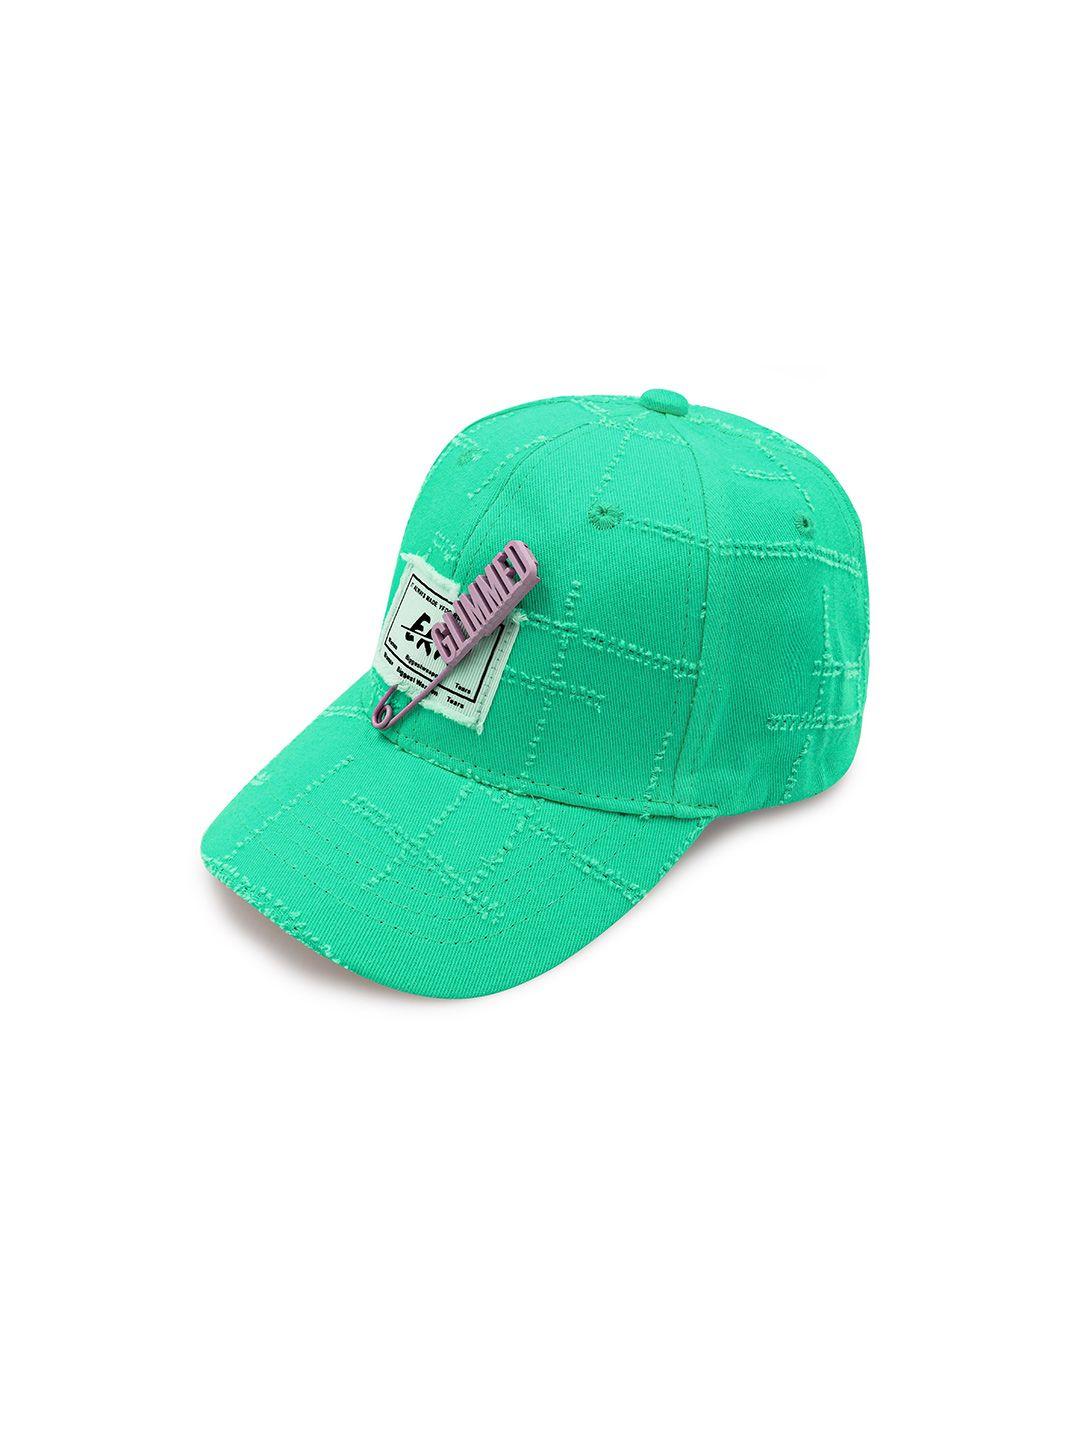 jenna unisex kids green embroidered baseball cap